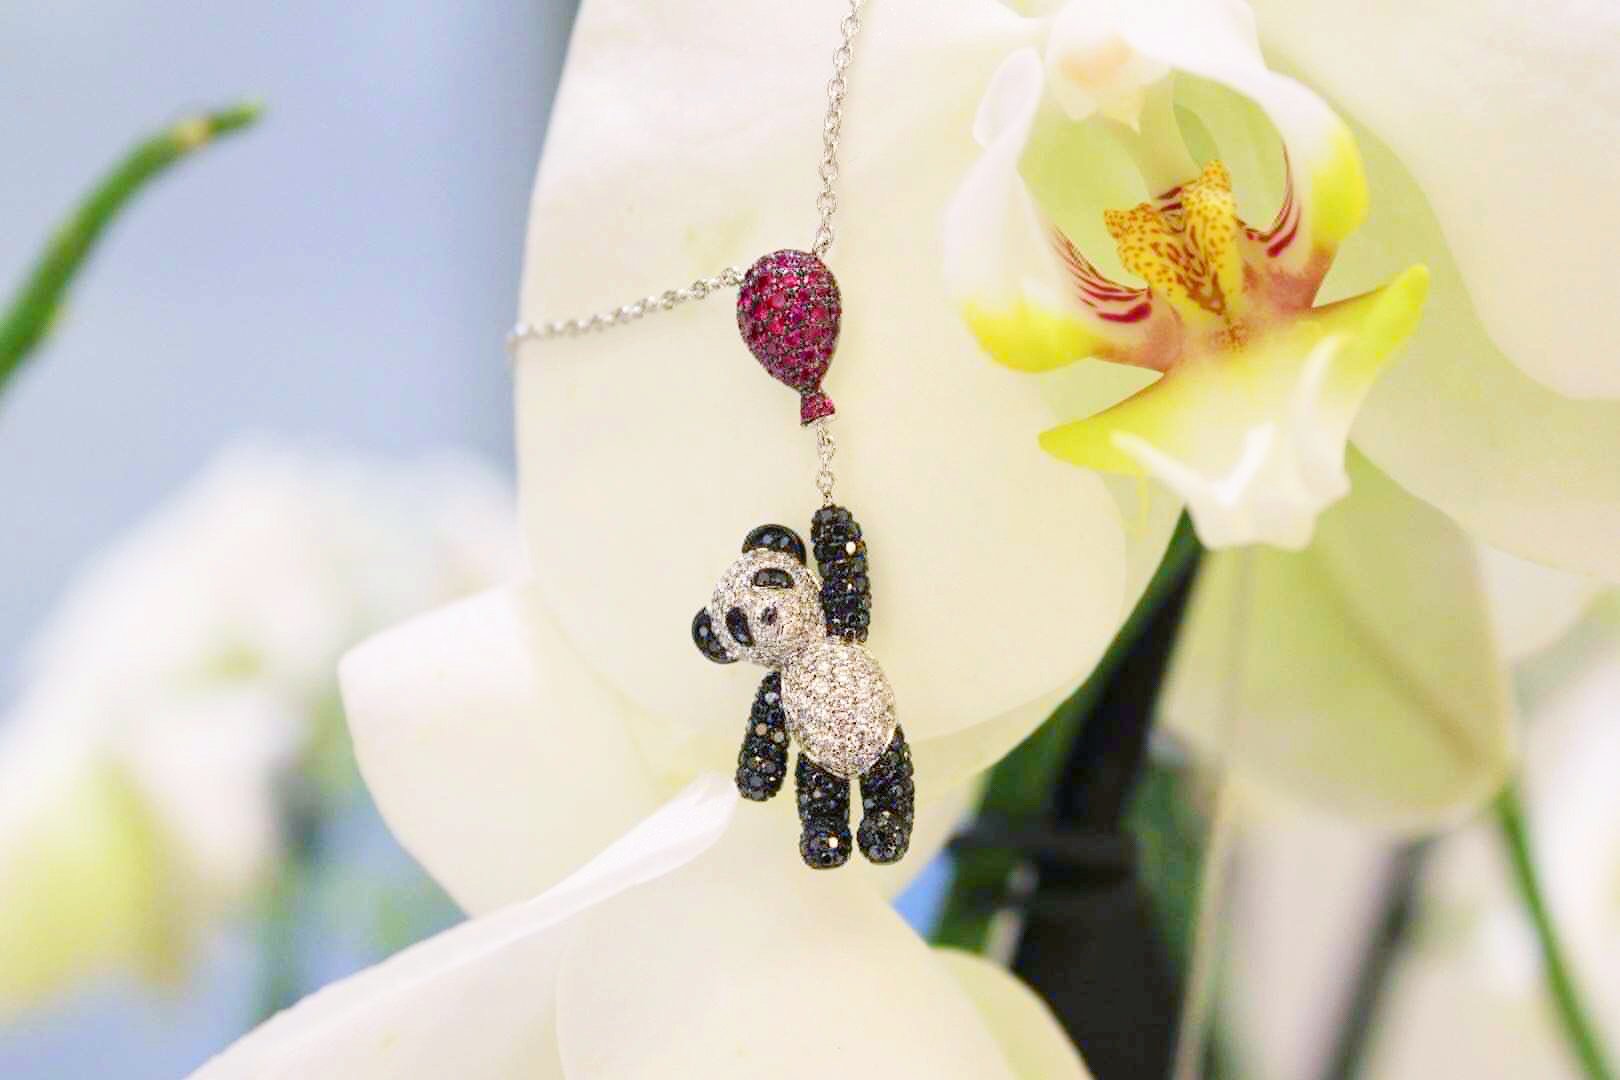 Qeelin麒麟珠宝BOBO熊猫系列项链，白金镶嵌黑白钻石，红宝石，型号BB-030-NL29-WGDRU插图